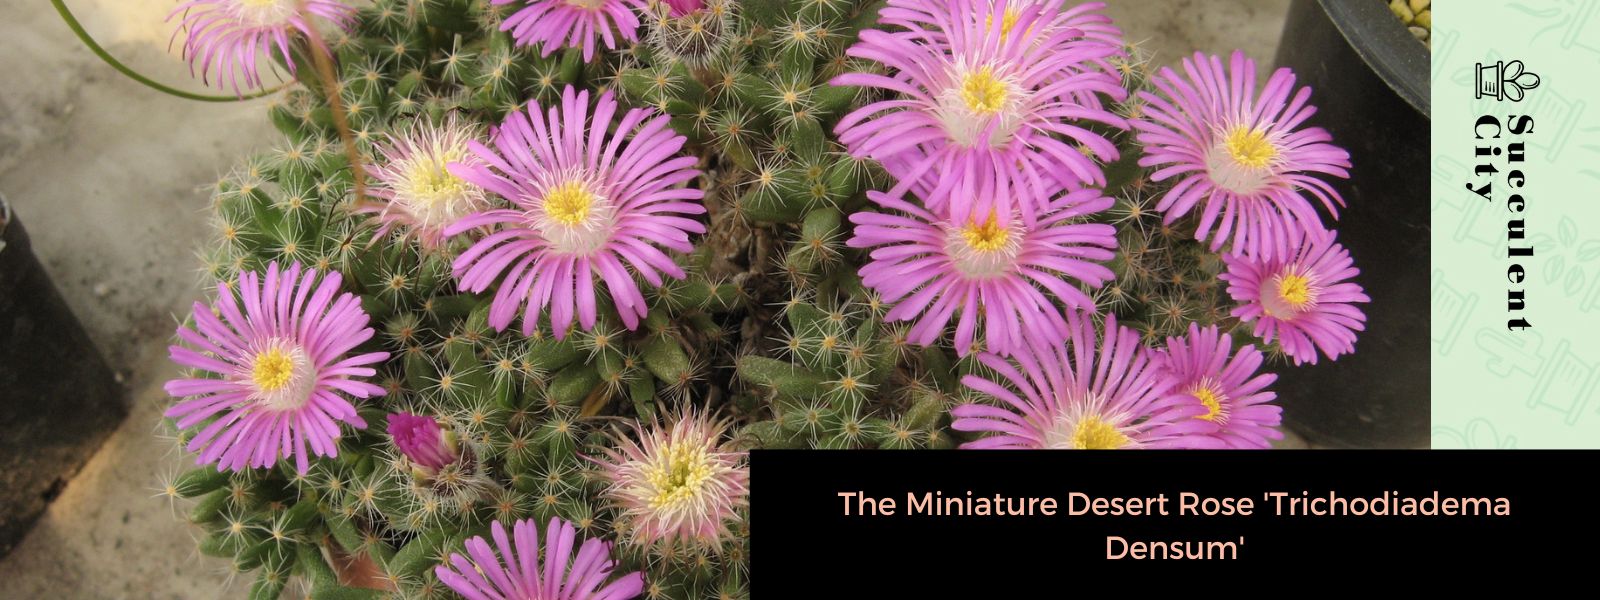 La rosa del desierto en miniatura 'Trichodiadema Densum'